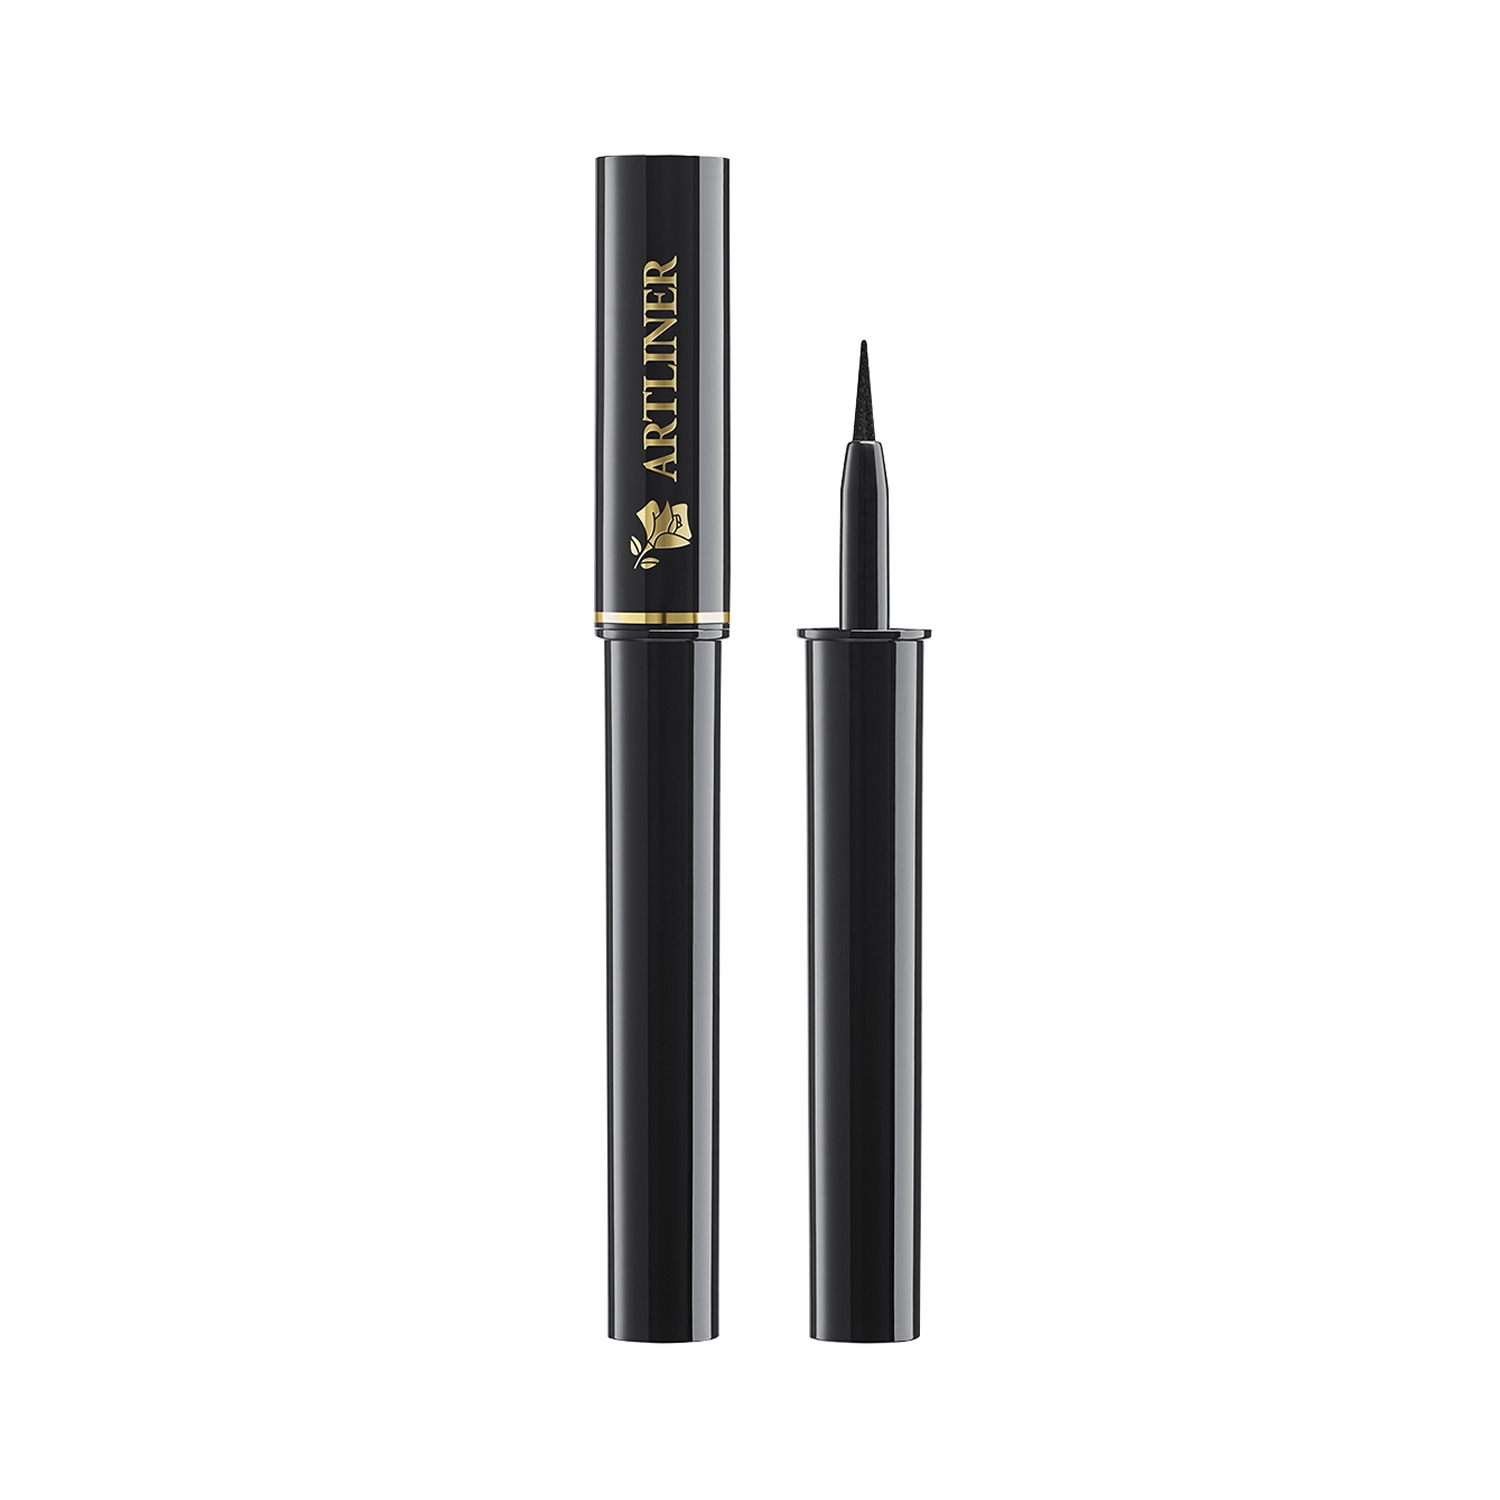 Lancome | Lancome Artliner Liquid Eyeliner Pen - 01 Black Satin (1.4ml)